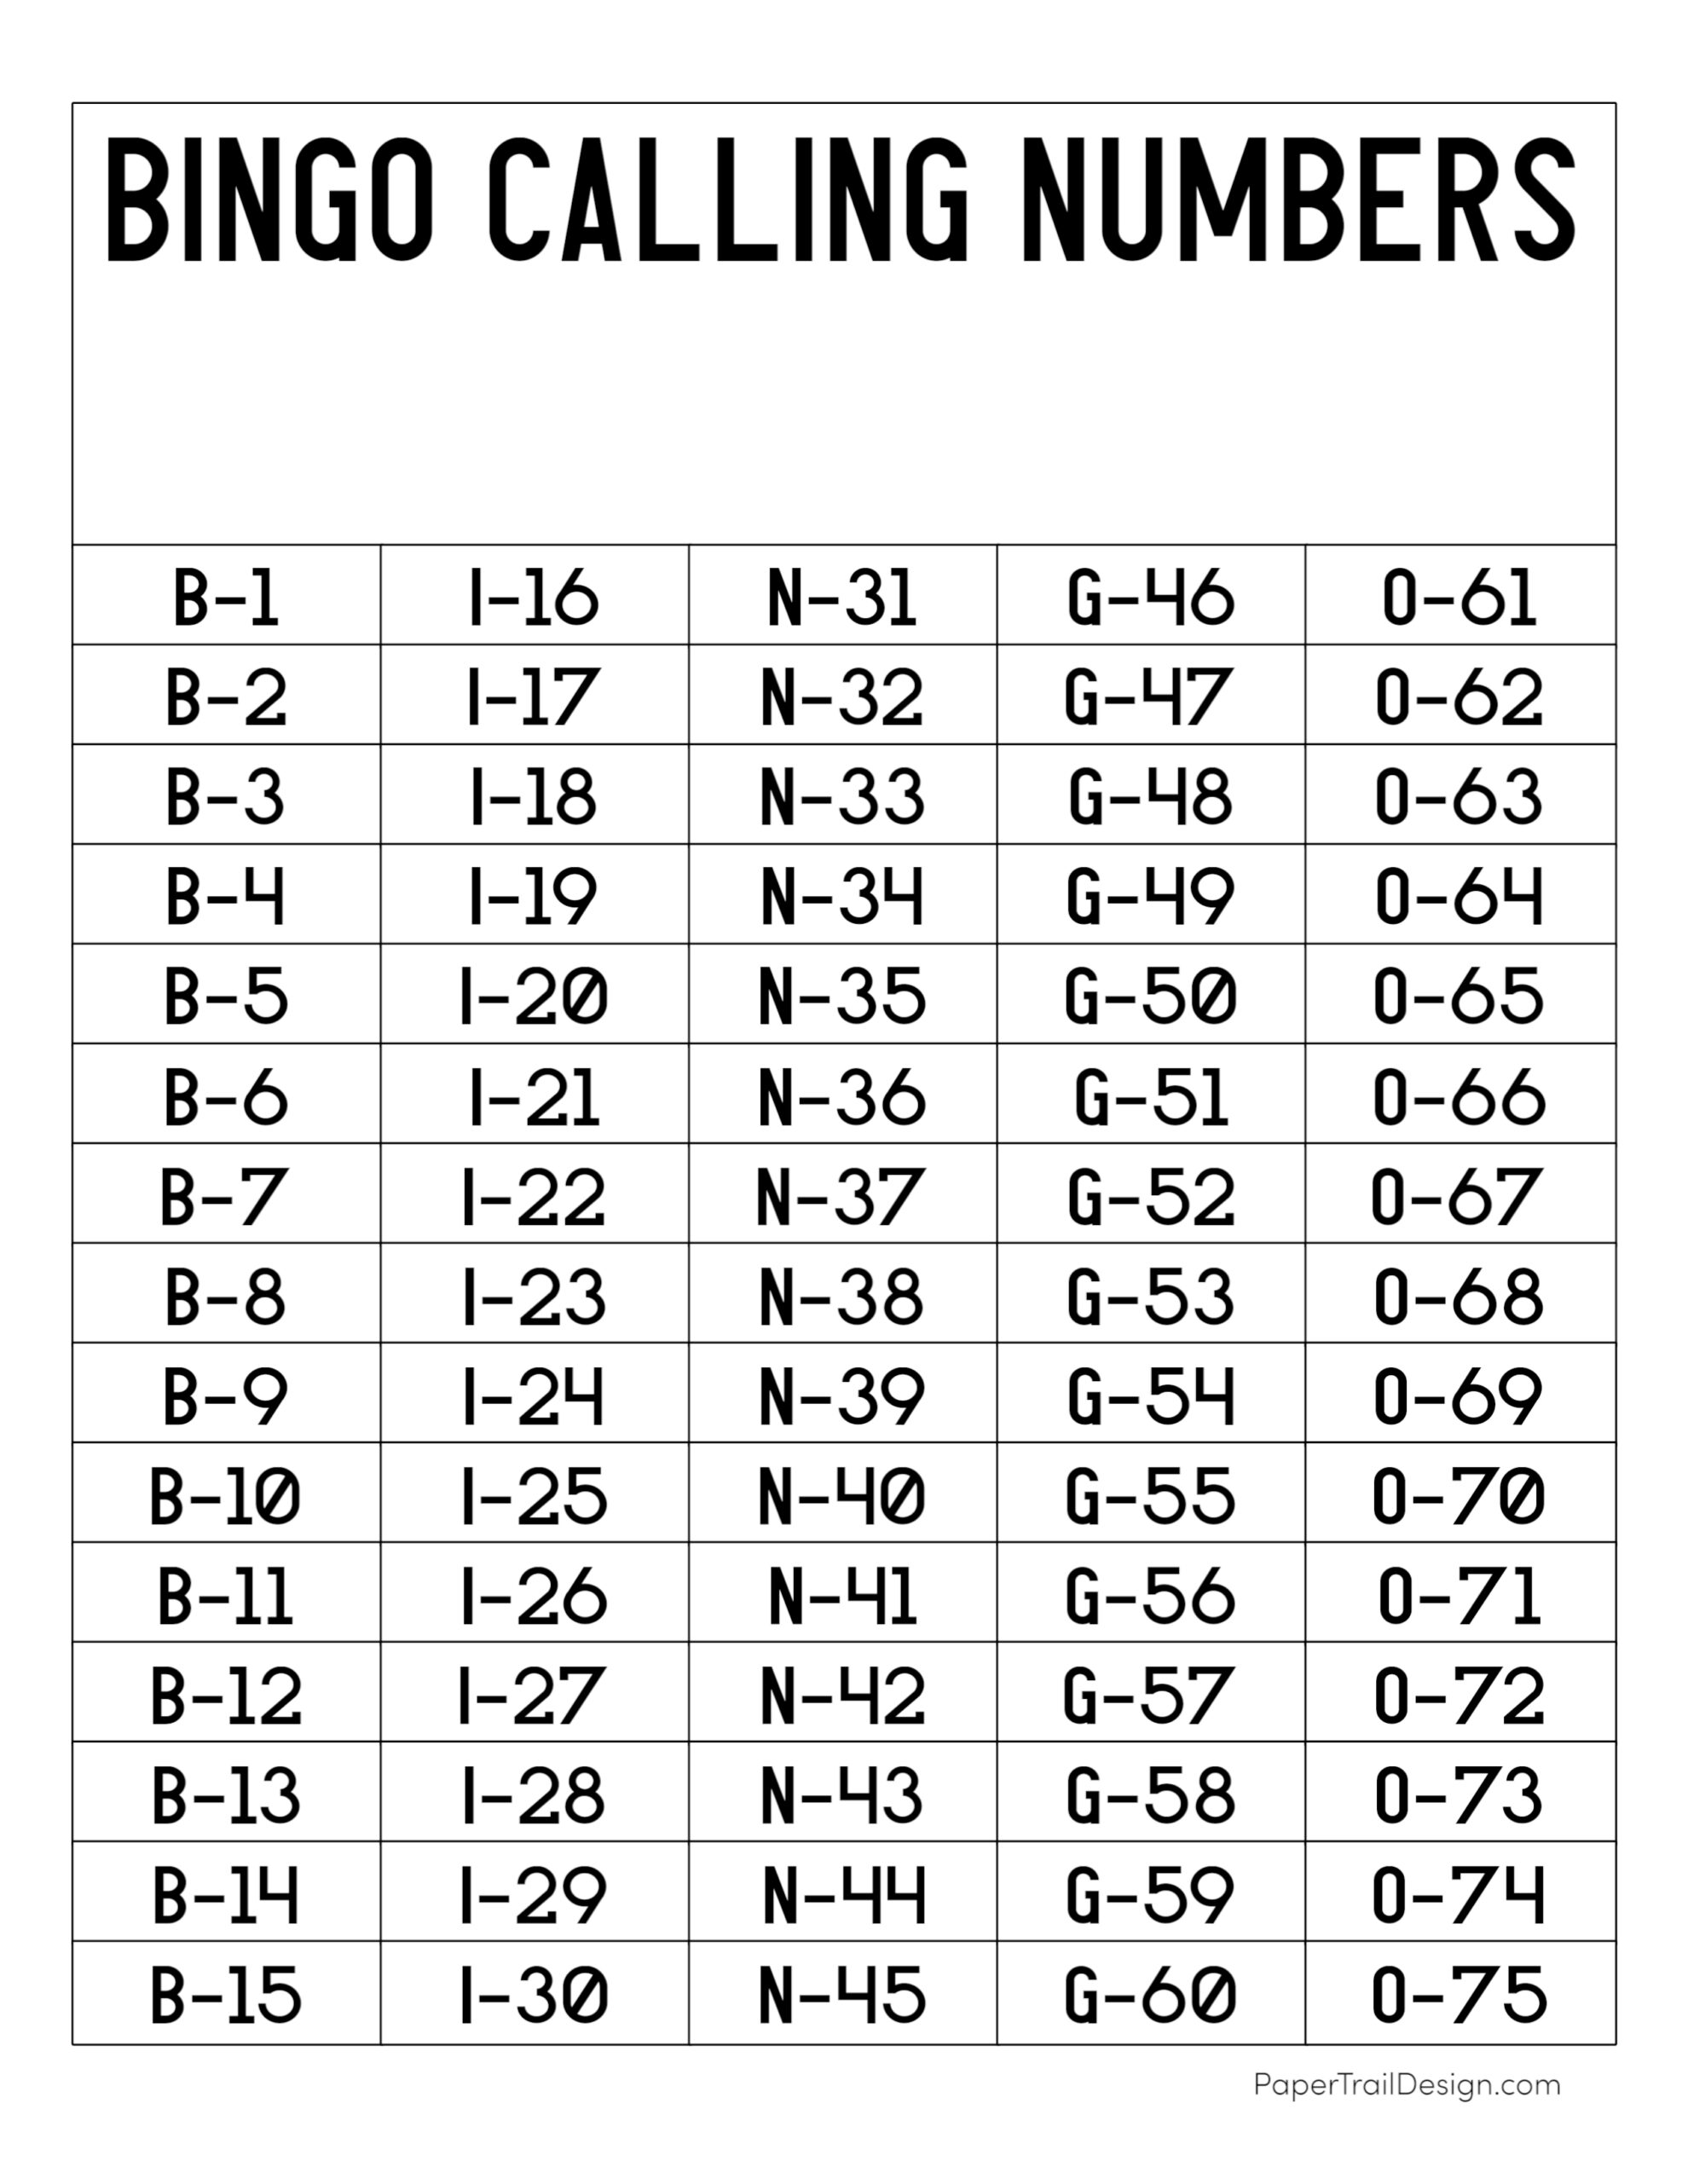 bingo-call-sheet-printable